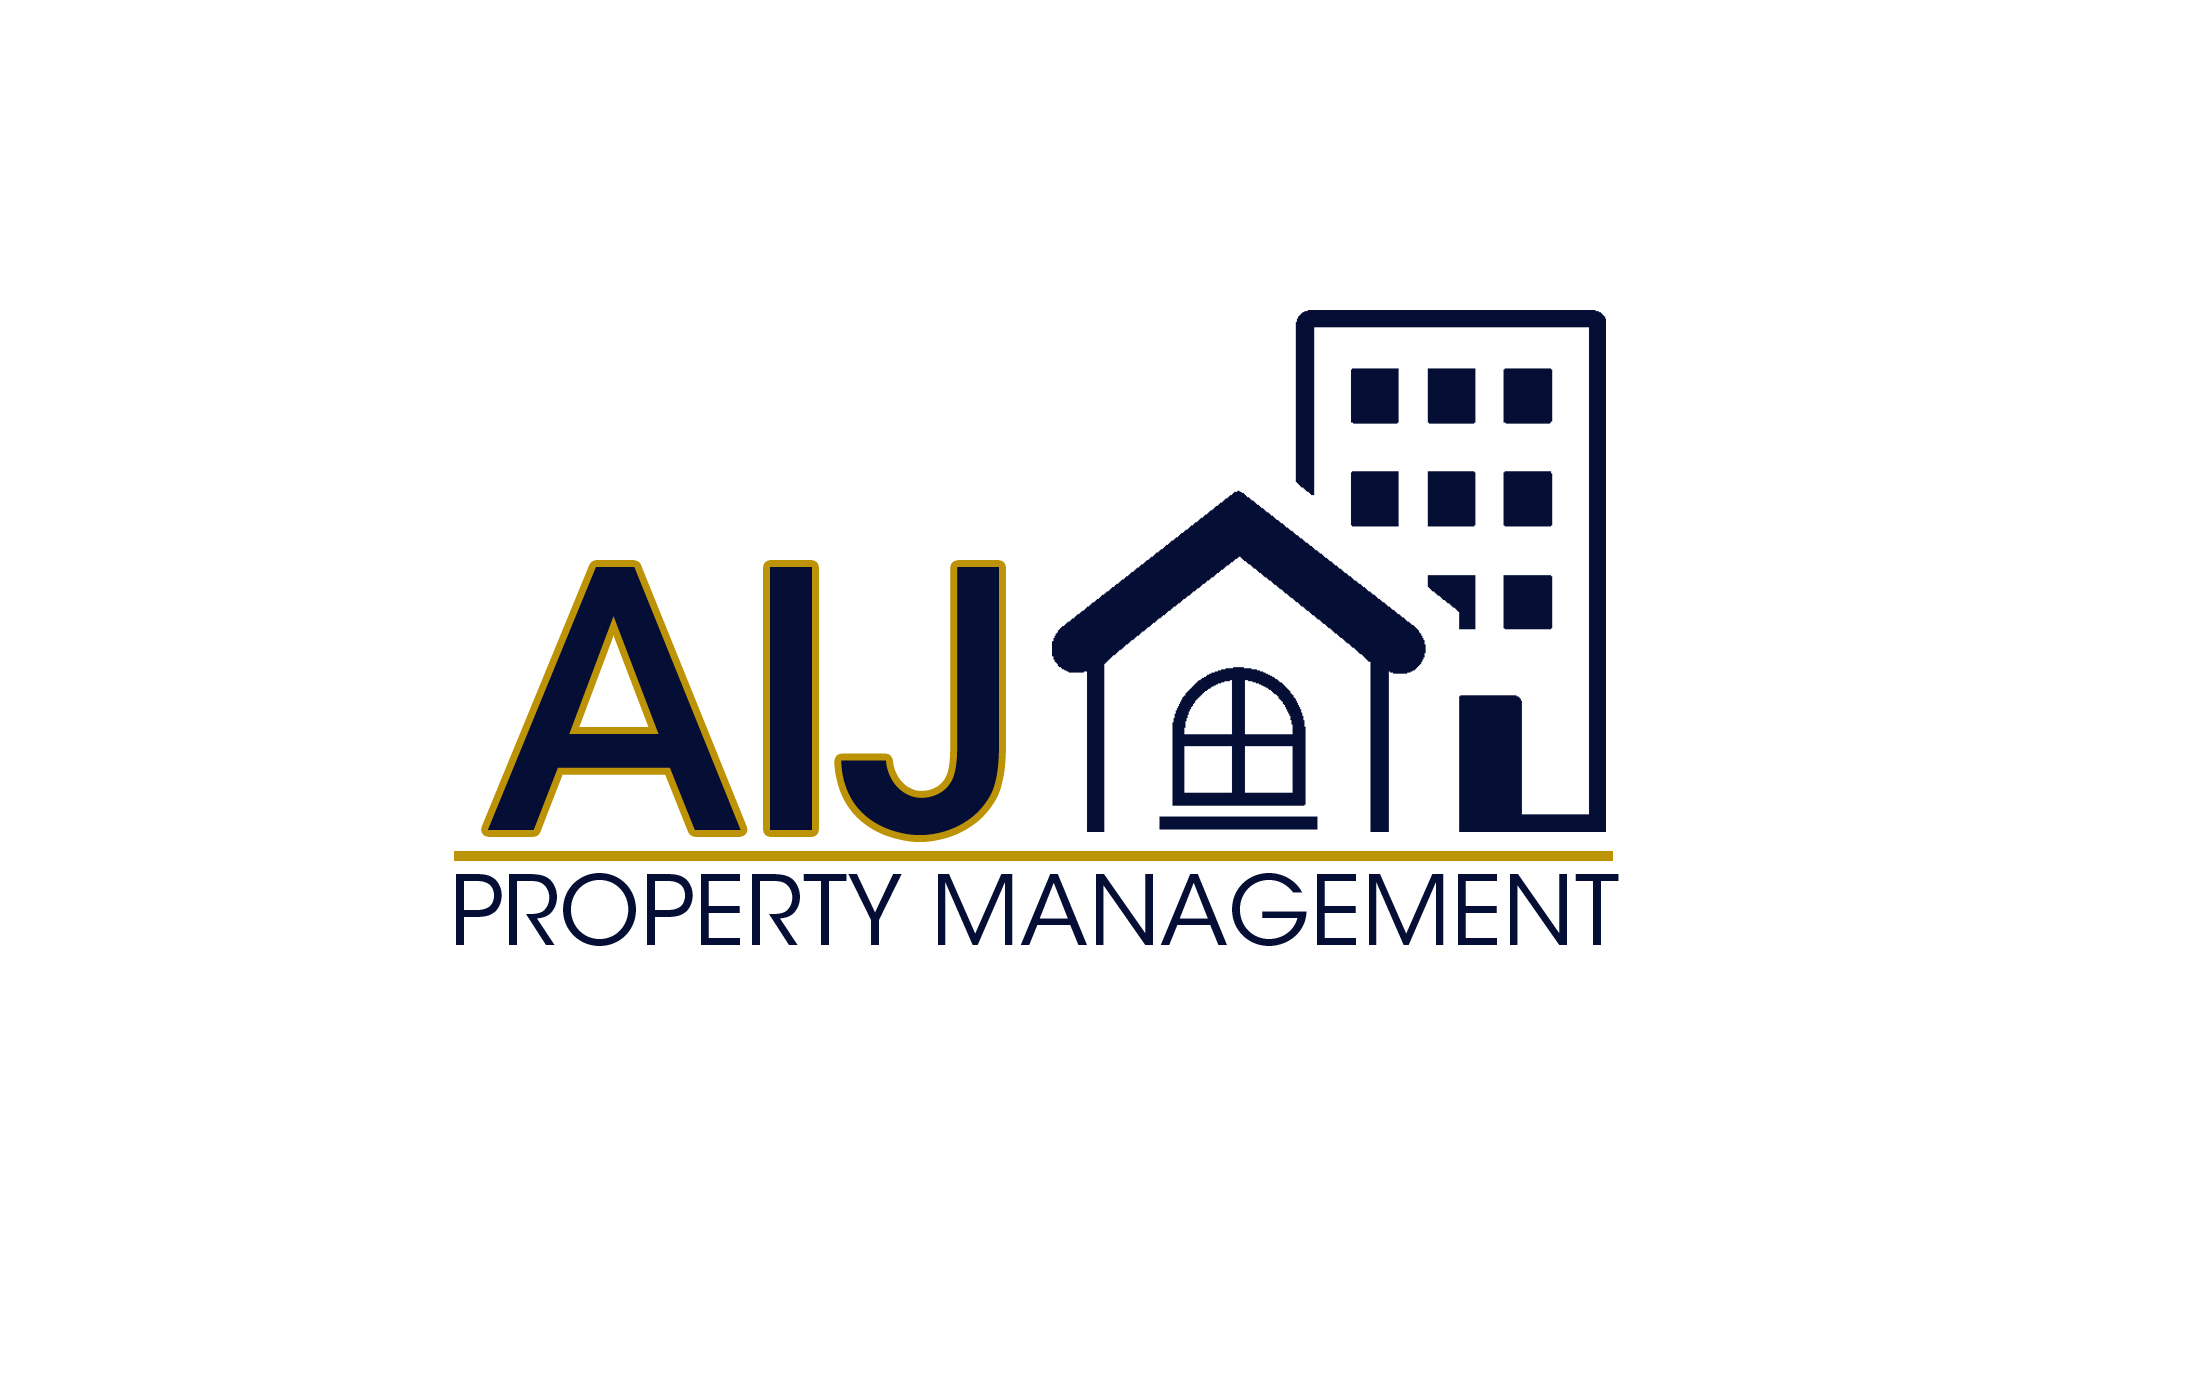 AIJ Property Management